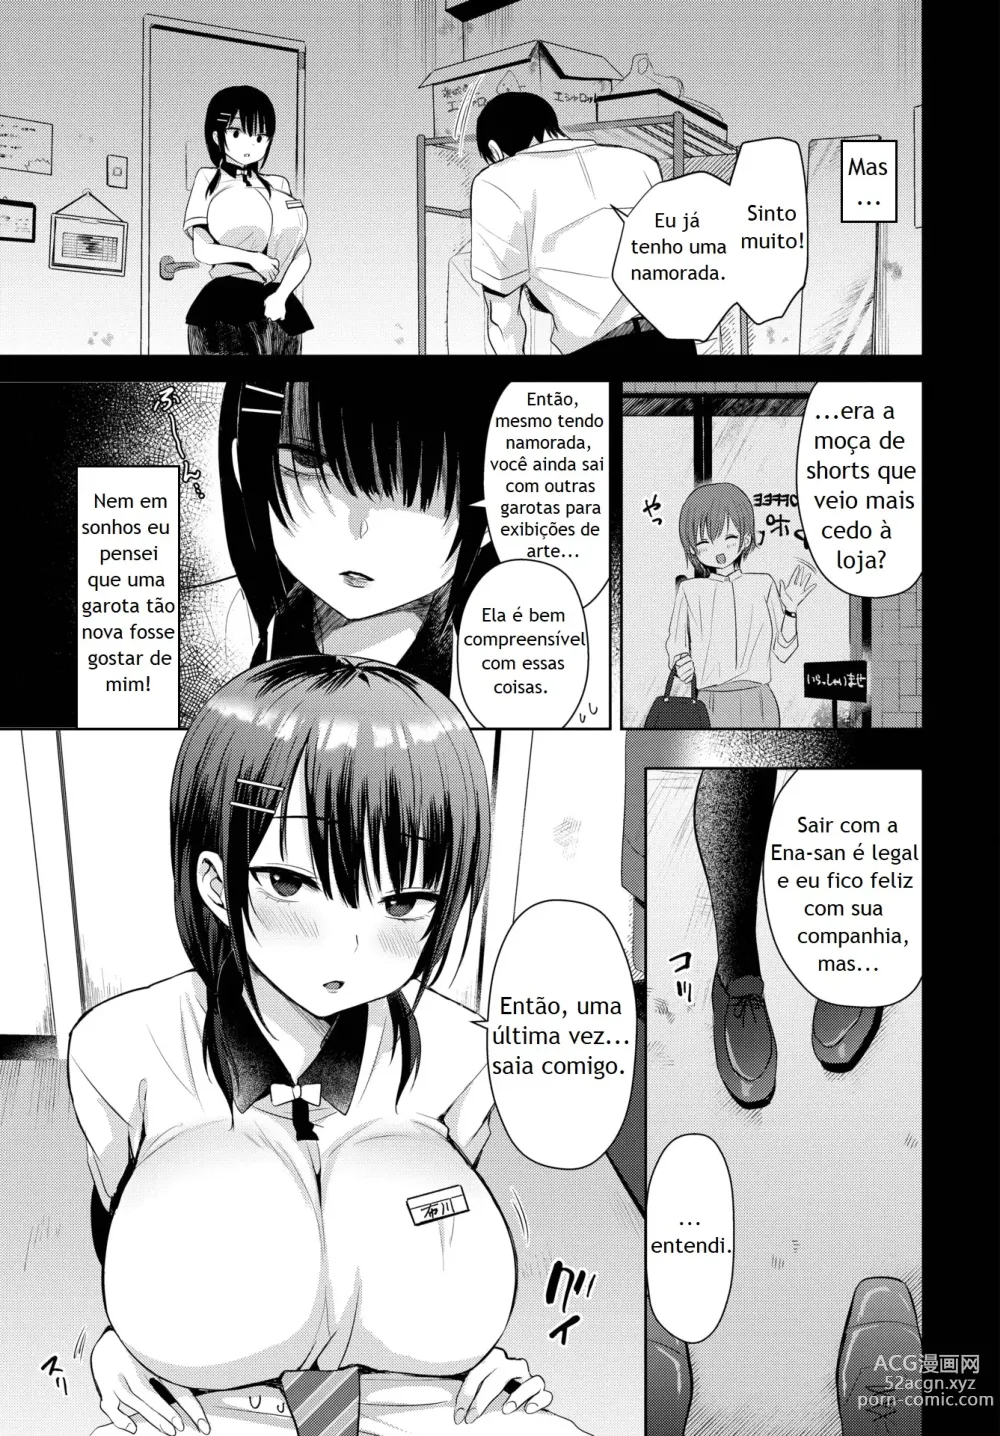 Page 3 of manga Furaretori - Its mine.